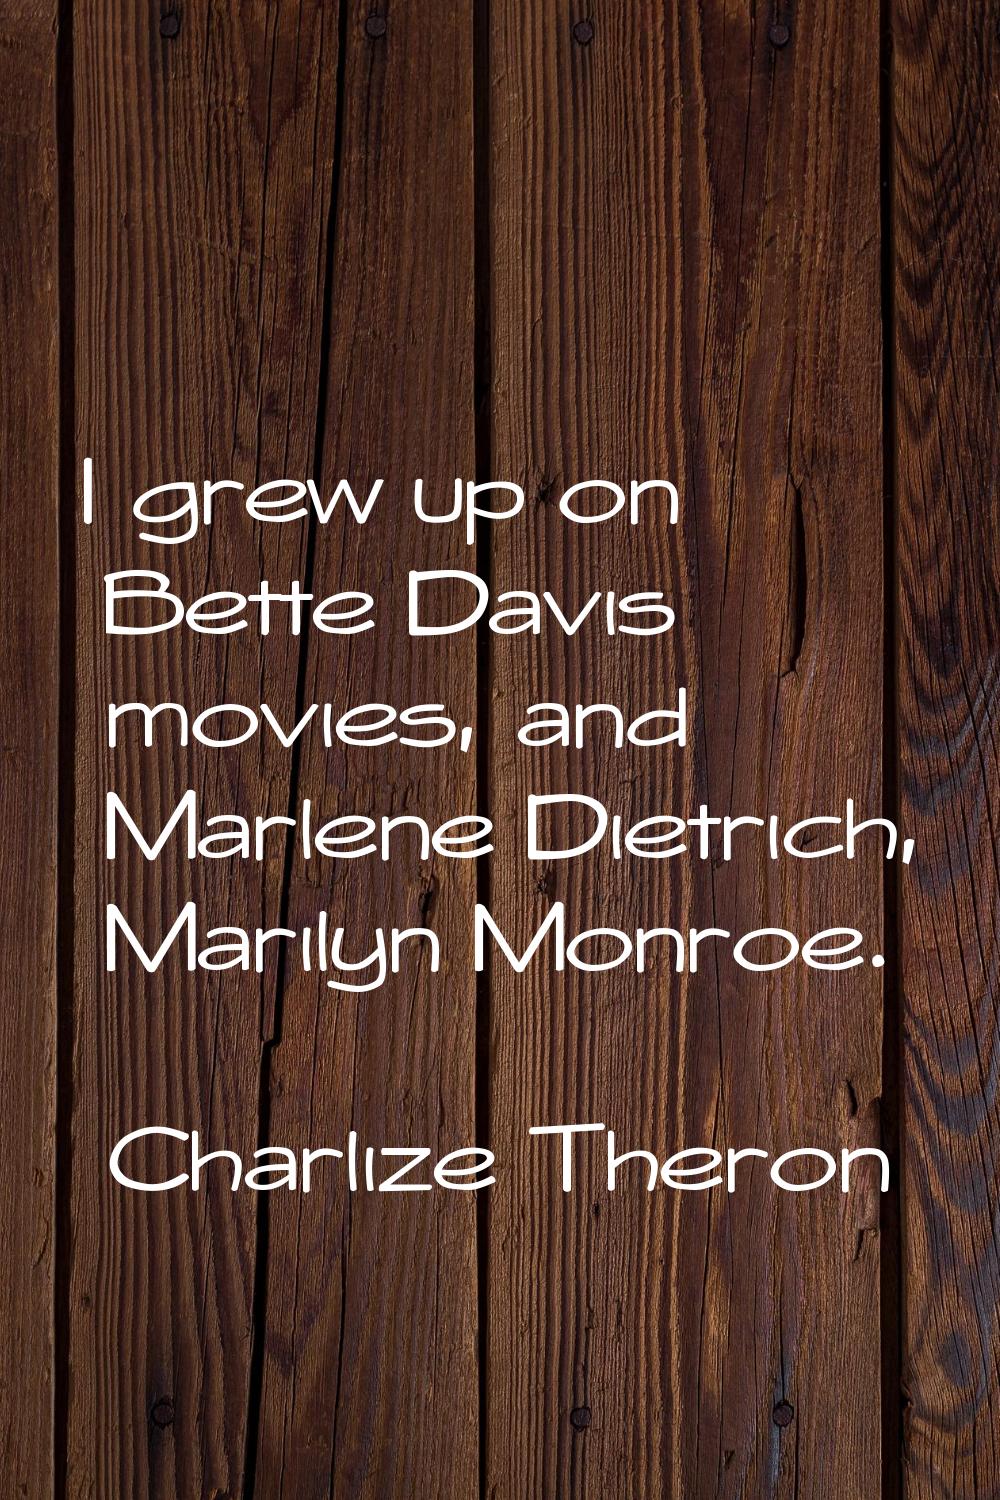 I grew up on Bette Davis movies, and Marlene Dietrich, Marilyn Monroe.